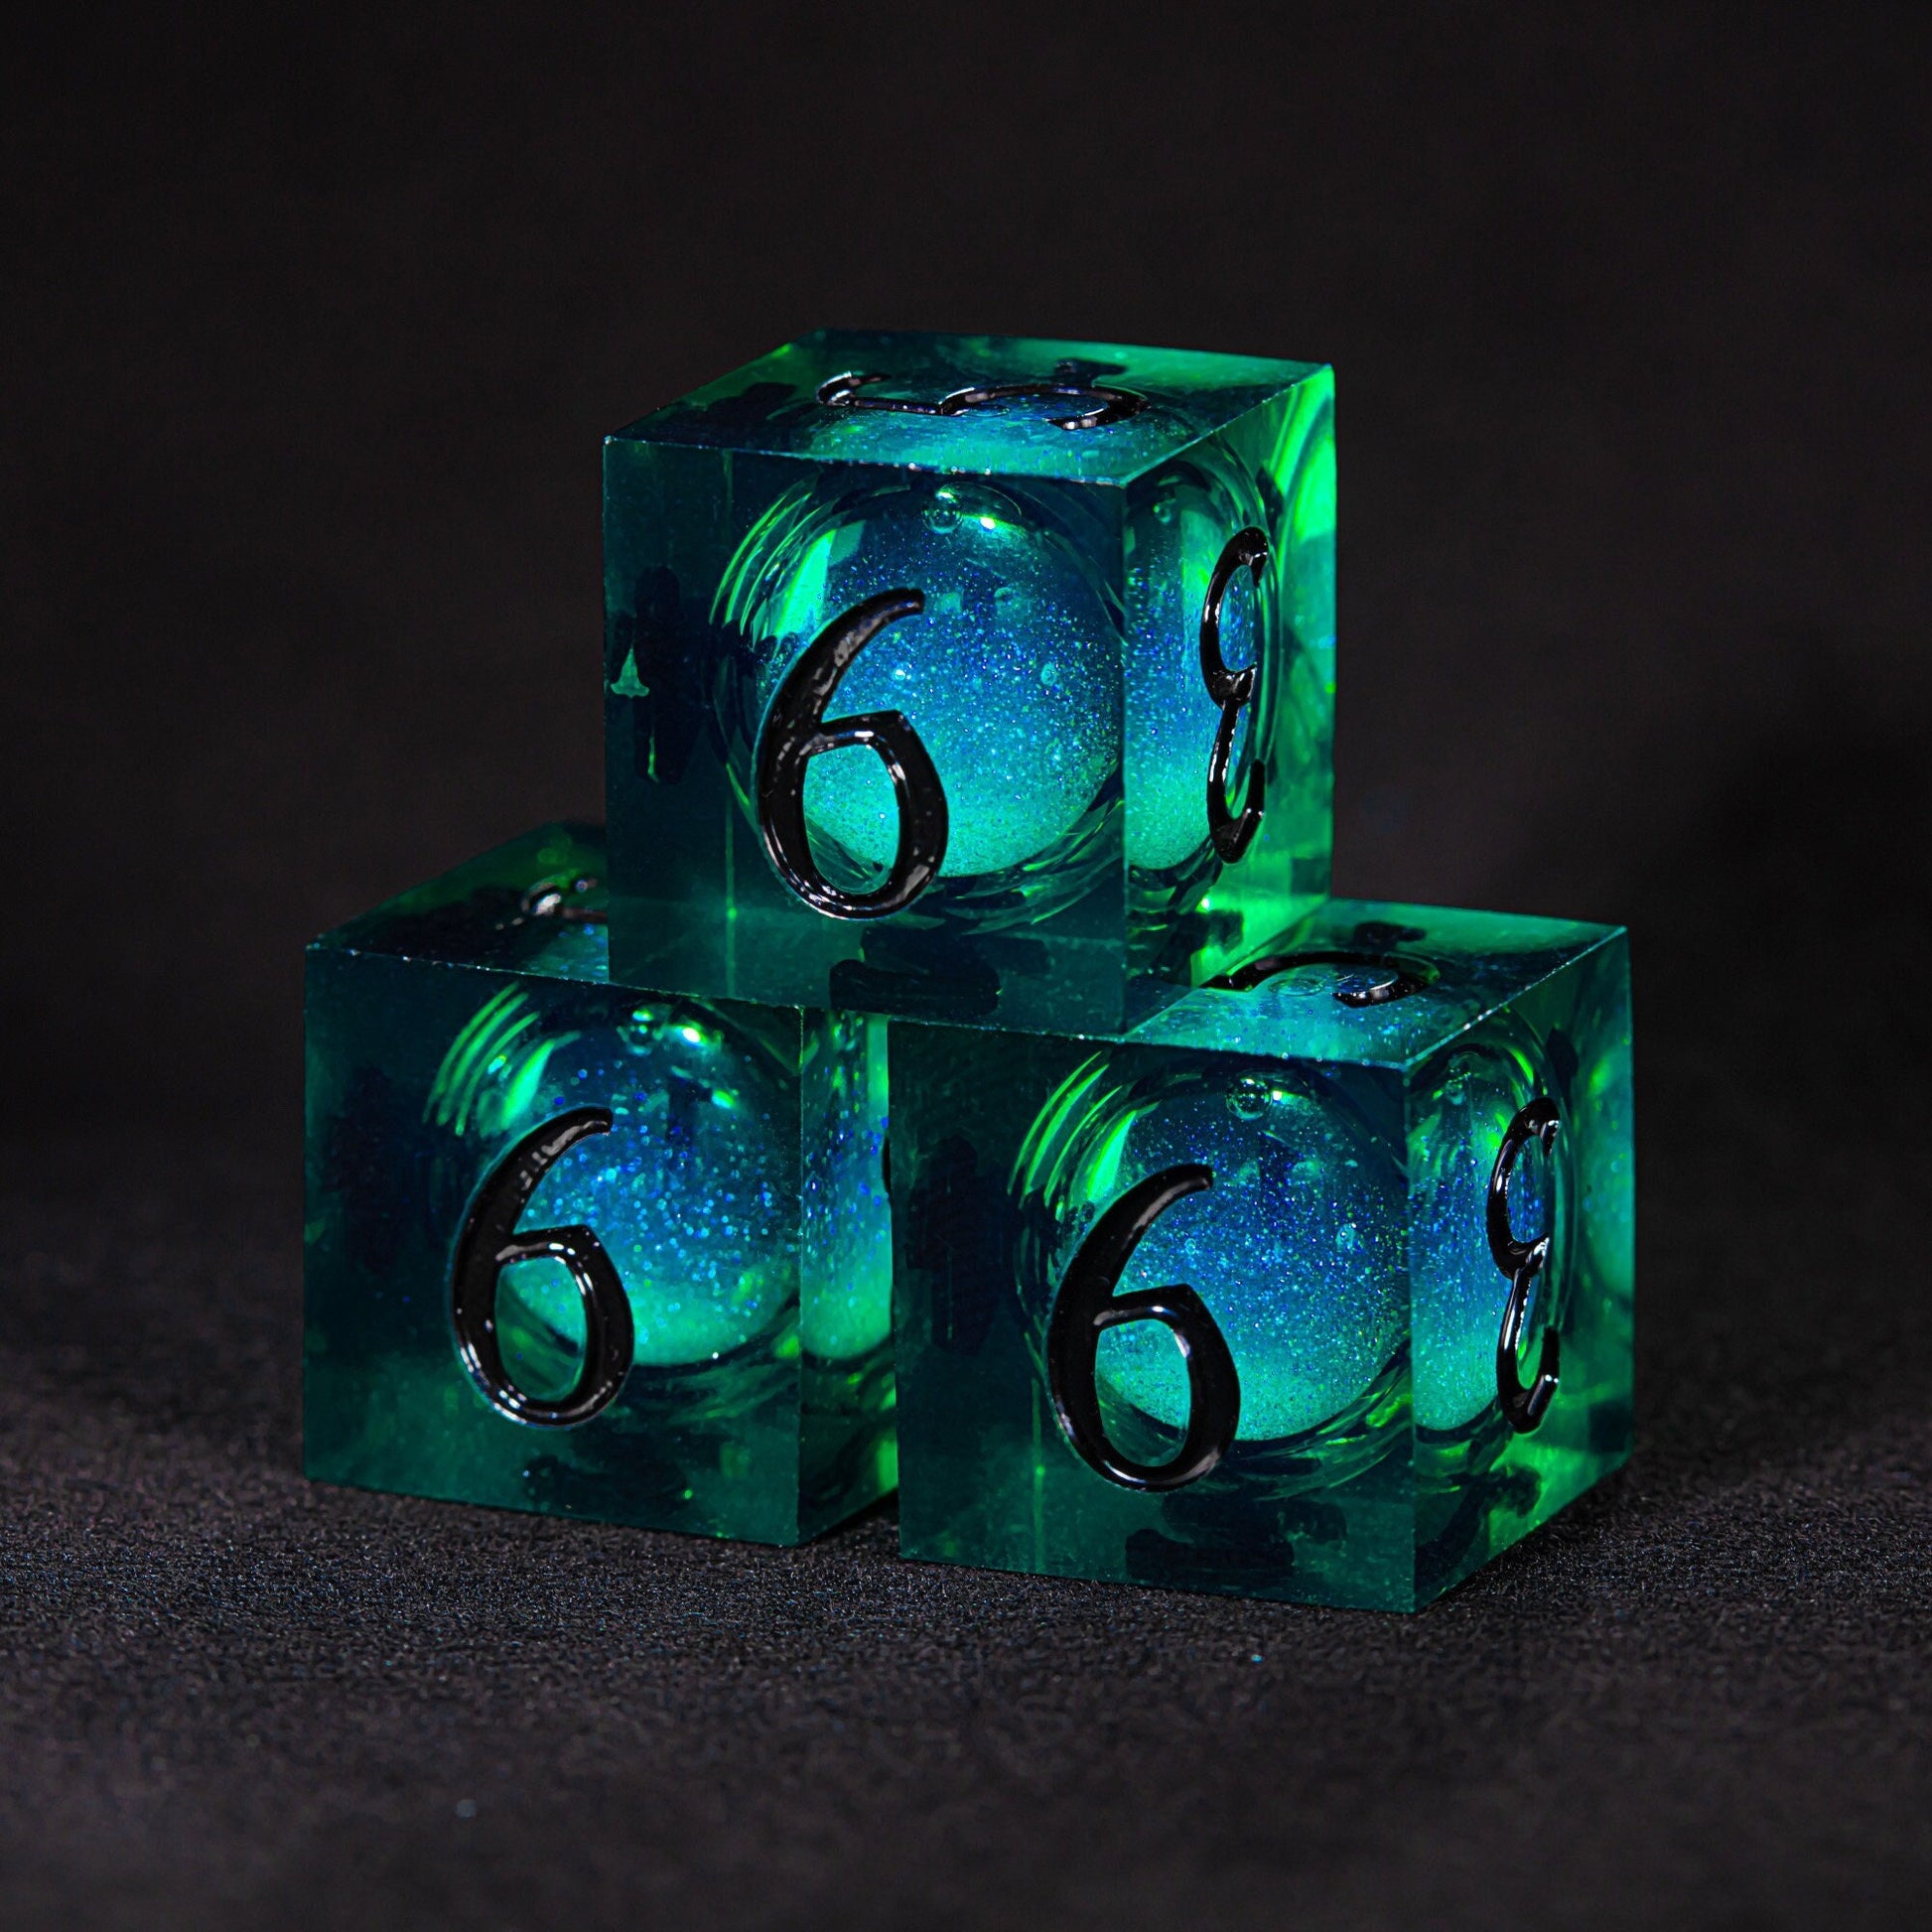 Green Liquid Core Galaxy Dice Supernatural Anti-possession DnD D&D Dice Set - CrystalMaggie